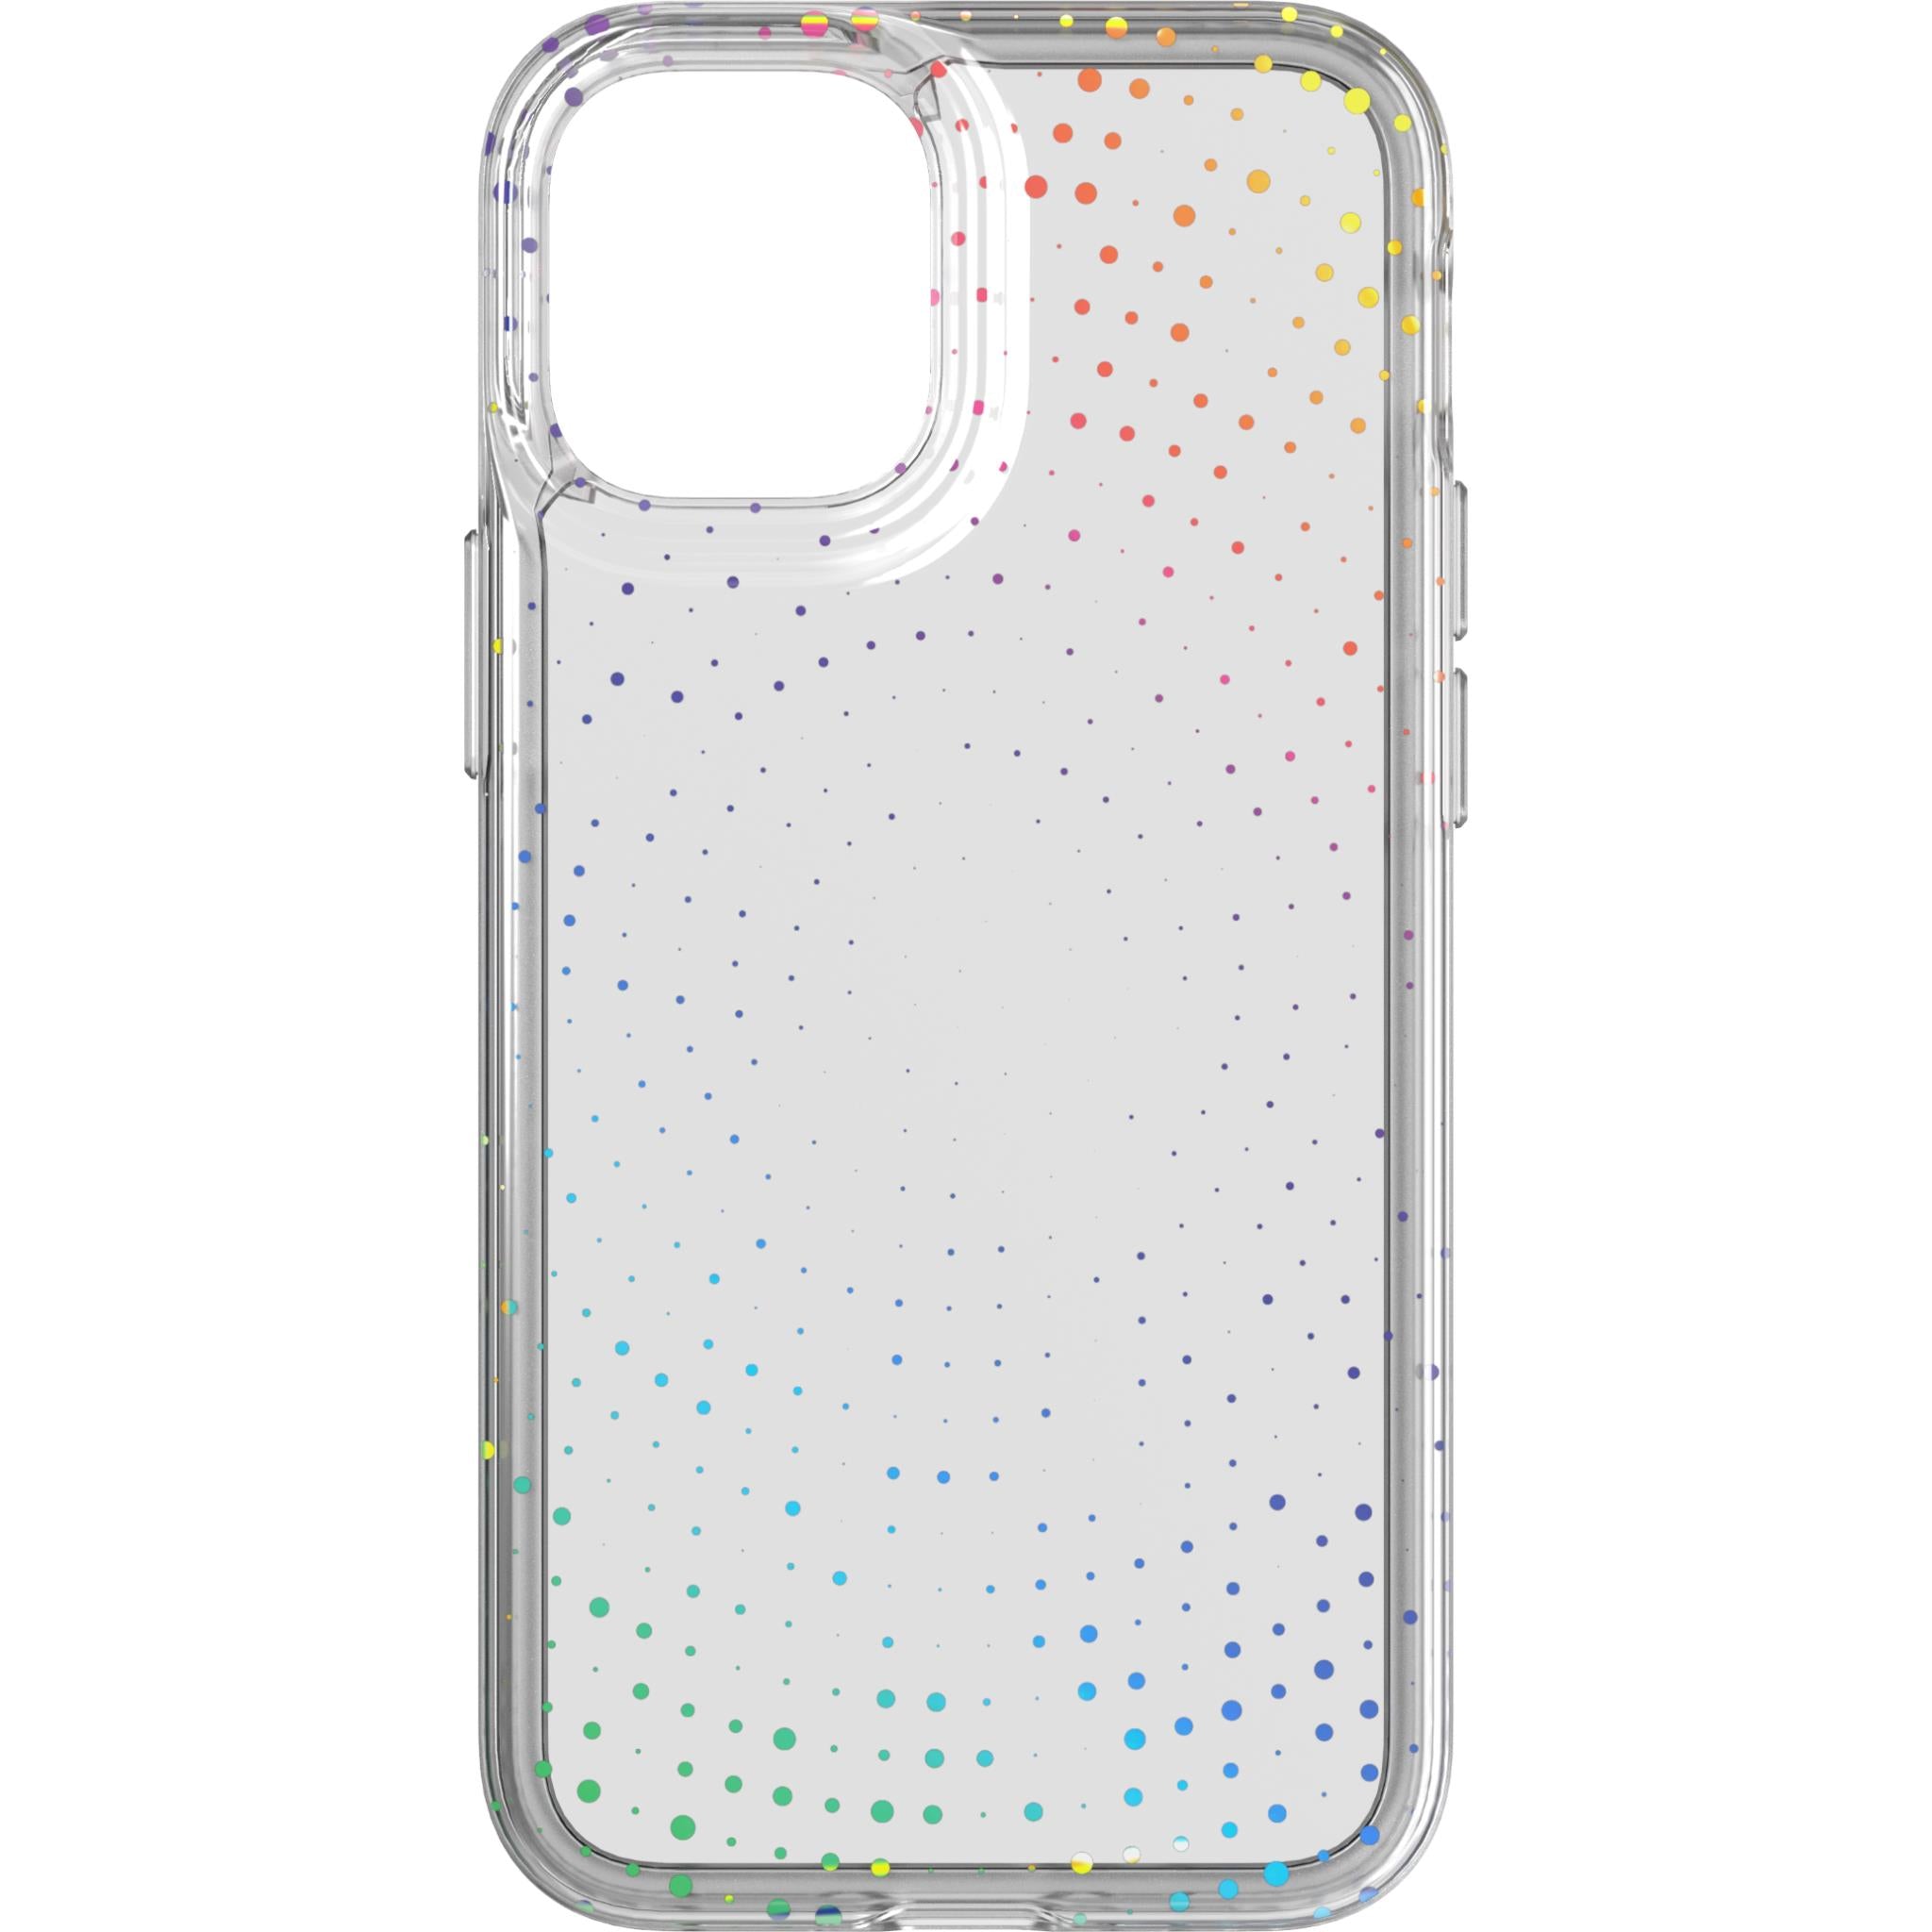 tech21 evo sparkle case for iphone 12 mini (clear)